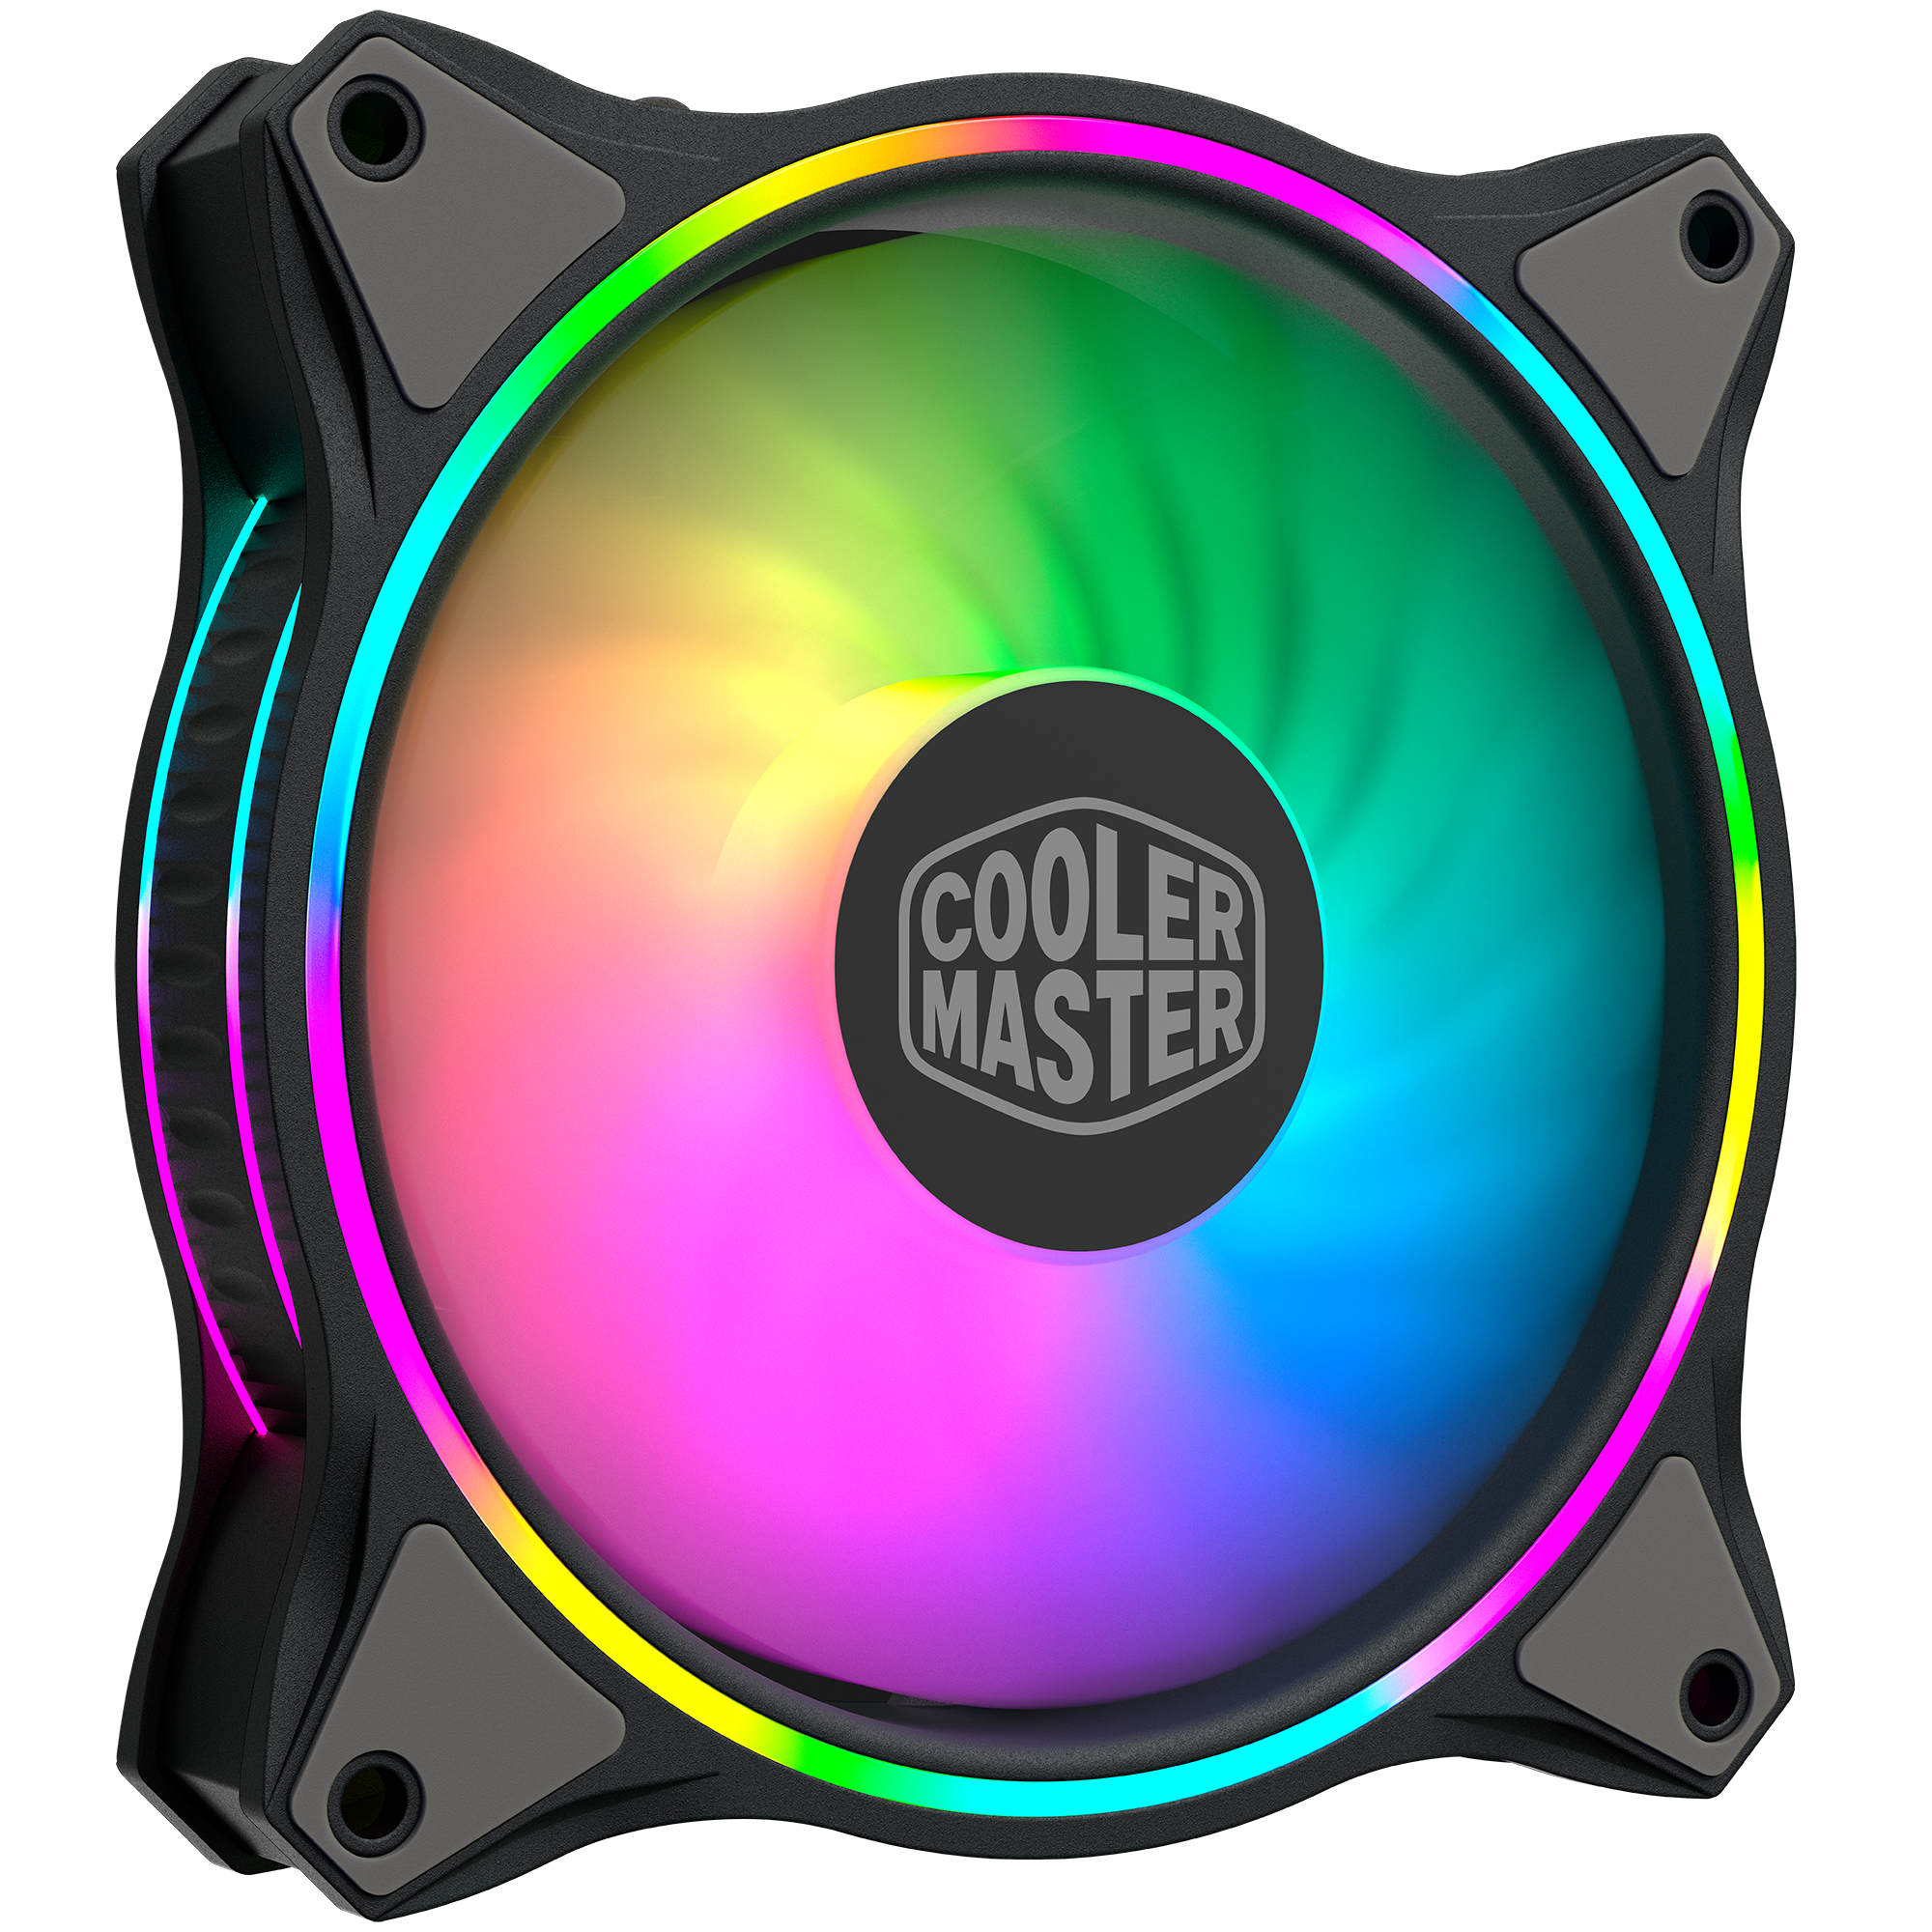 Cooler Master MF120 Halo ARGB Computer Fan